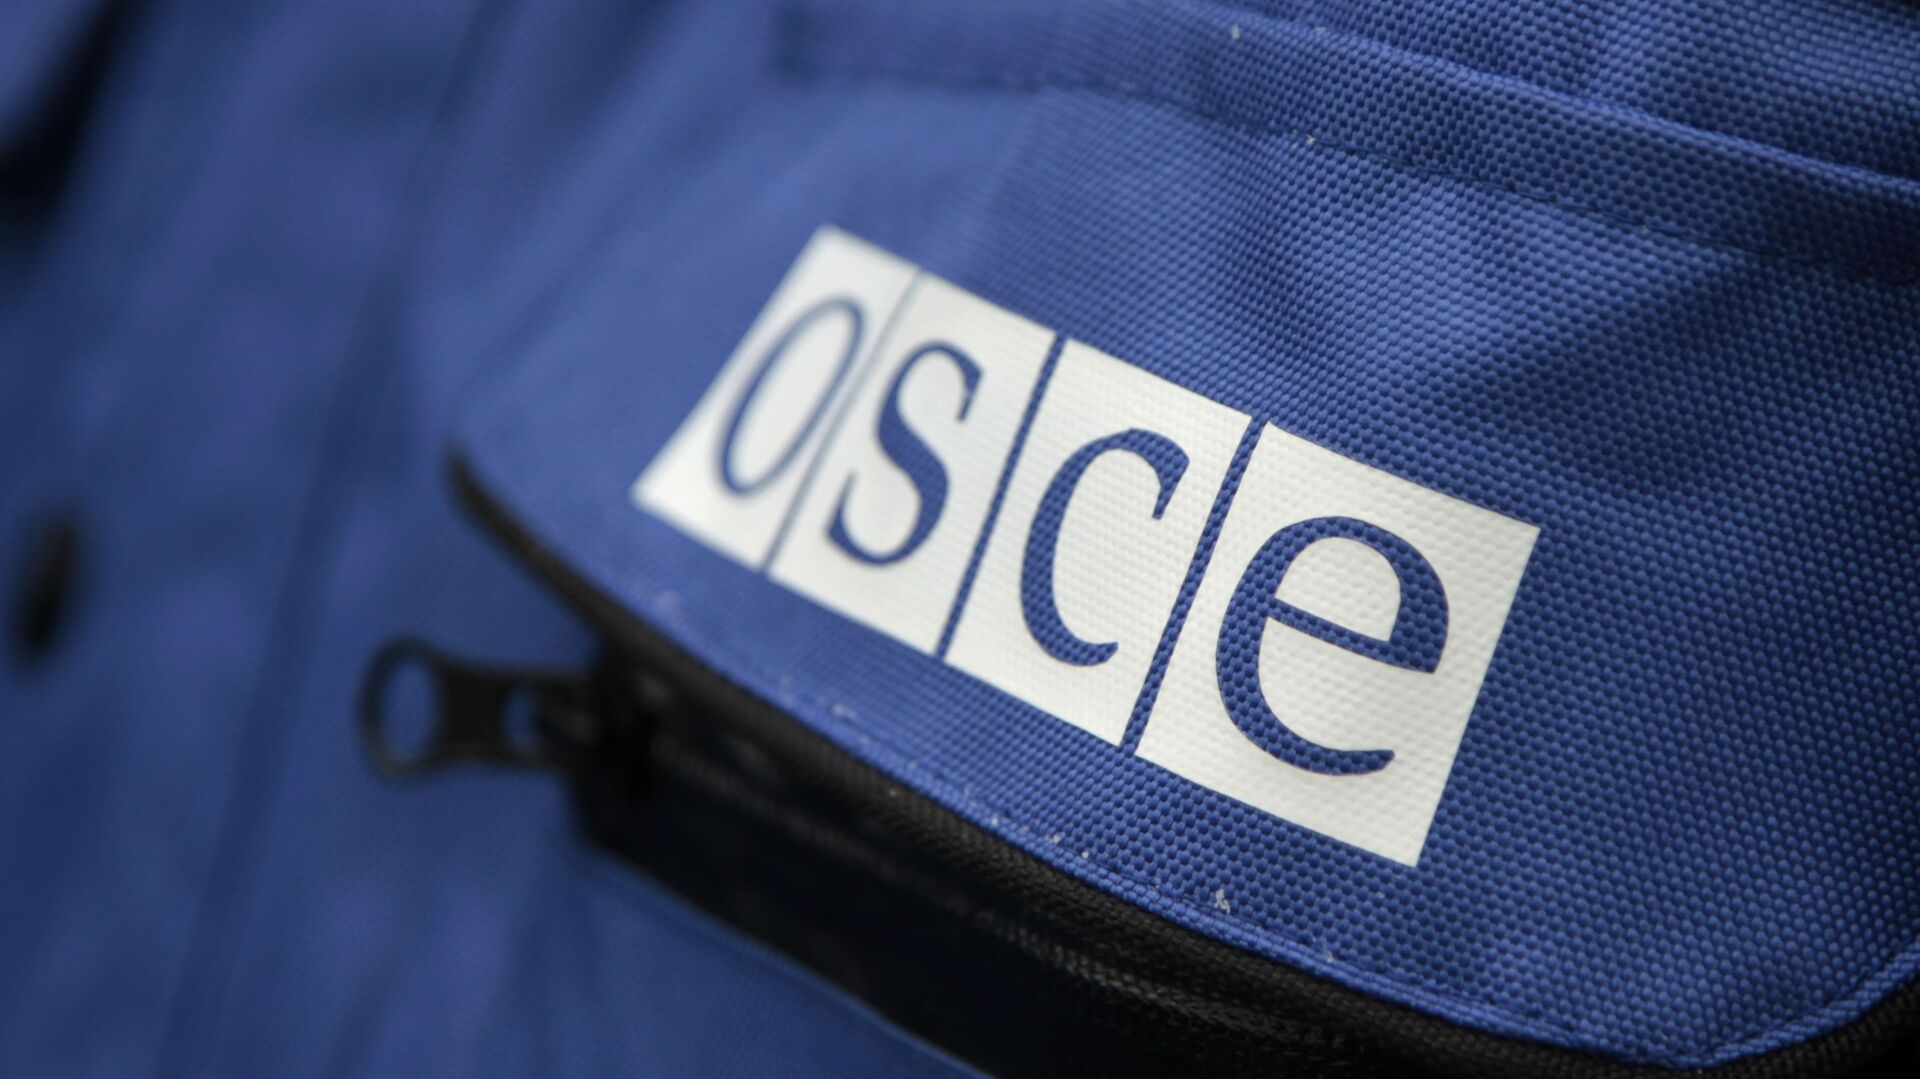 Надпись OSCE на куртке представителя ОБСЕ  - Sputnik Молдова, 1920, 16.08.2021